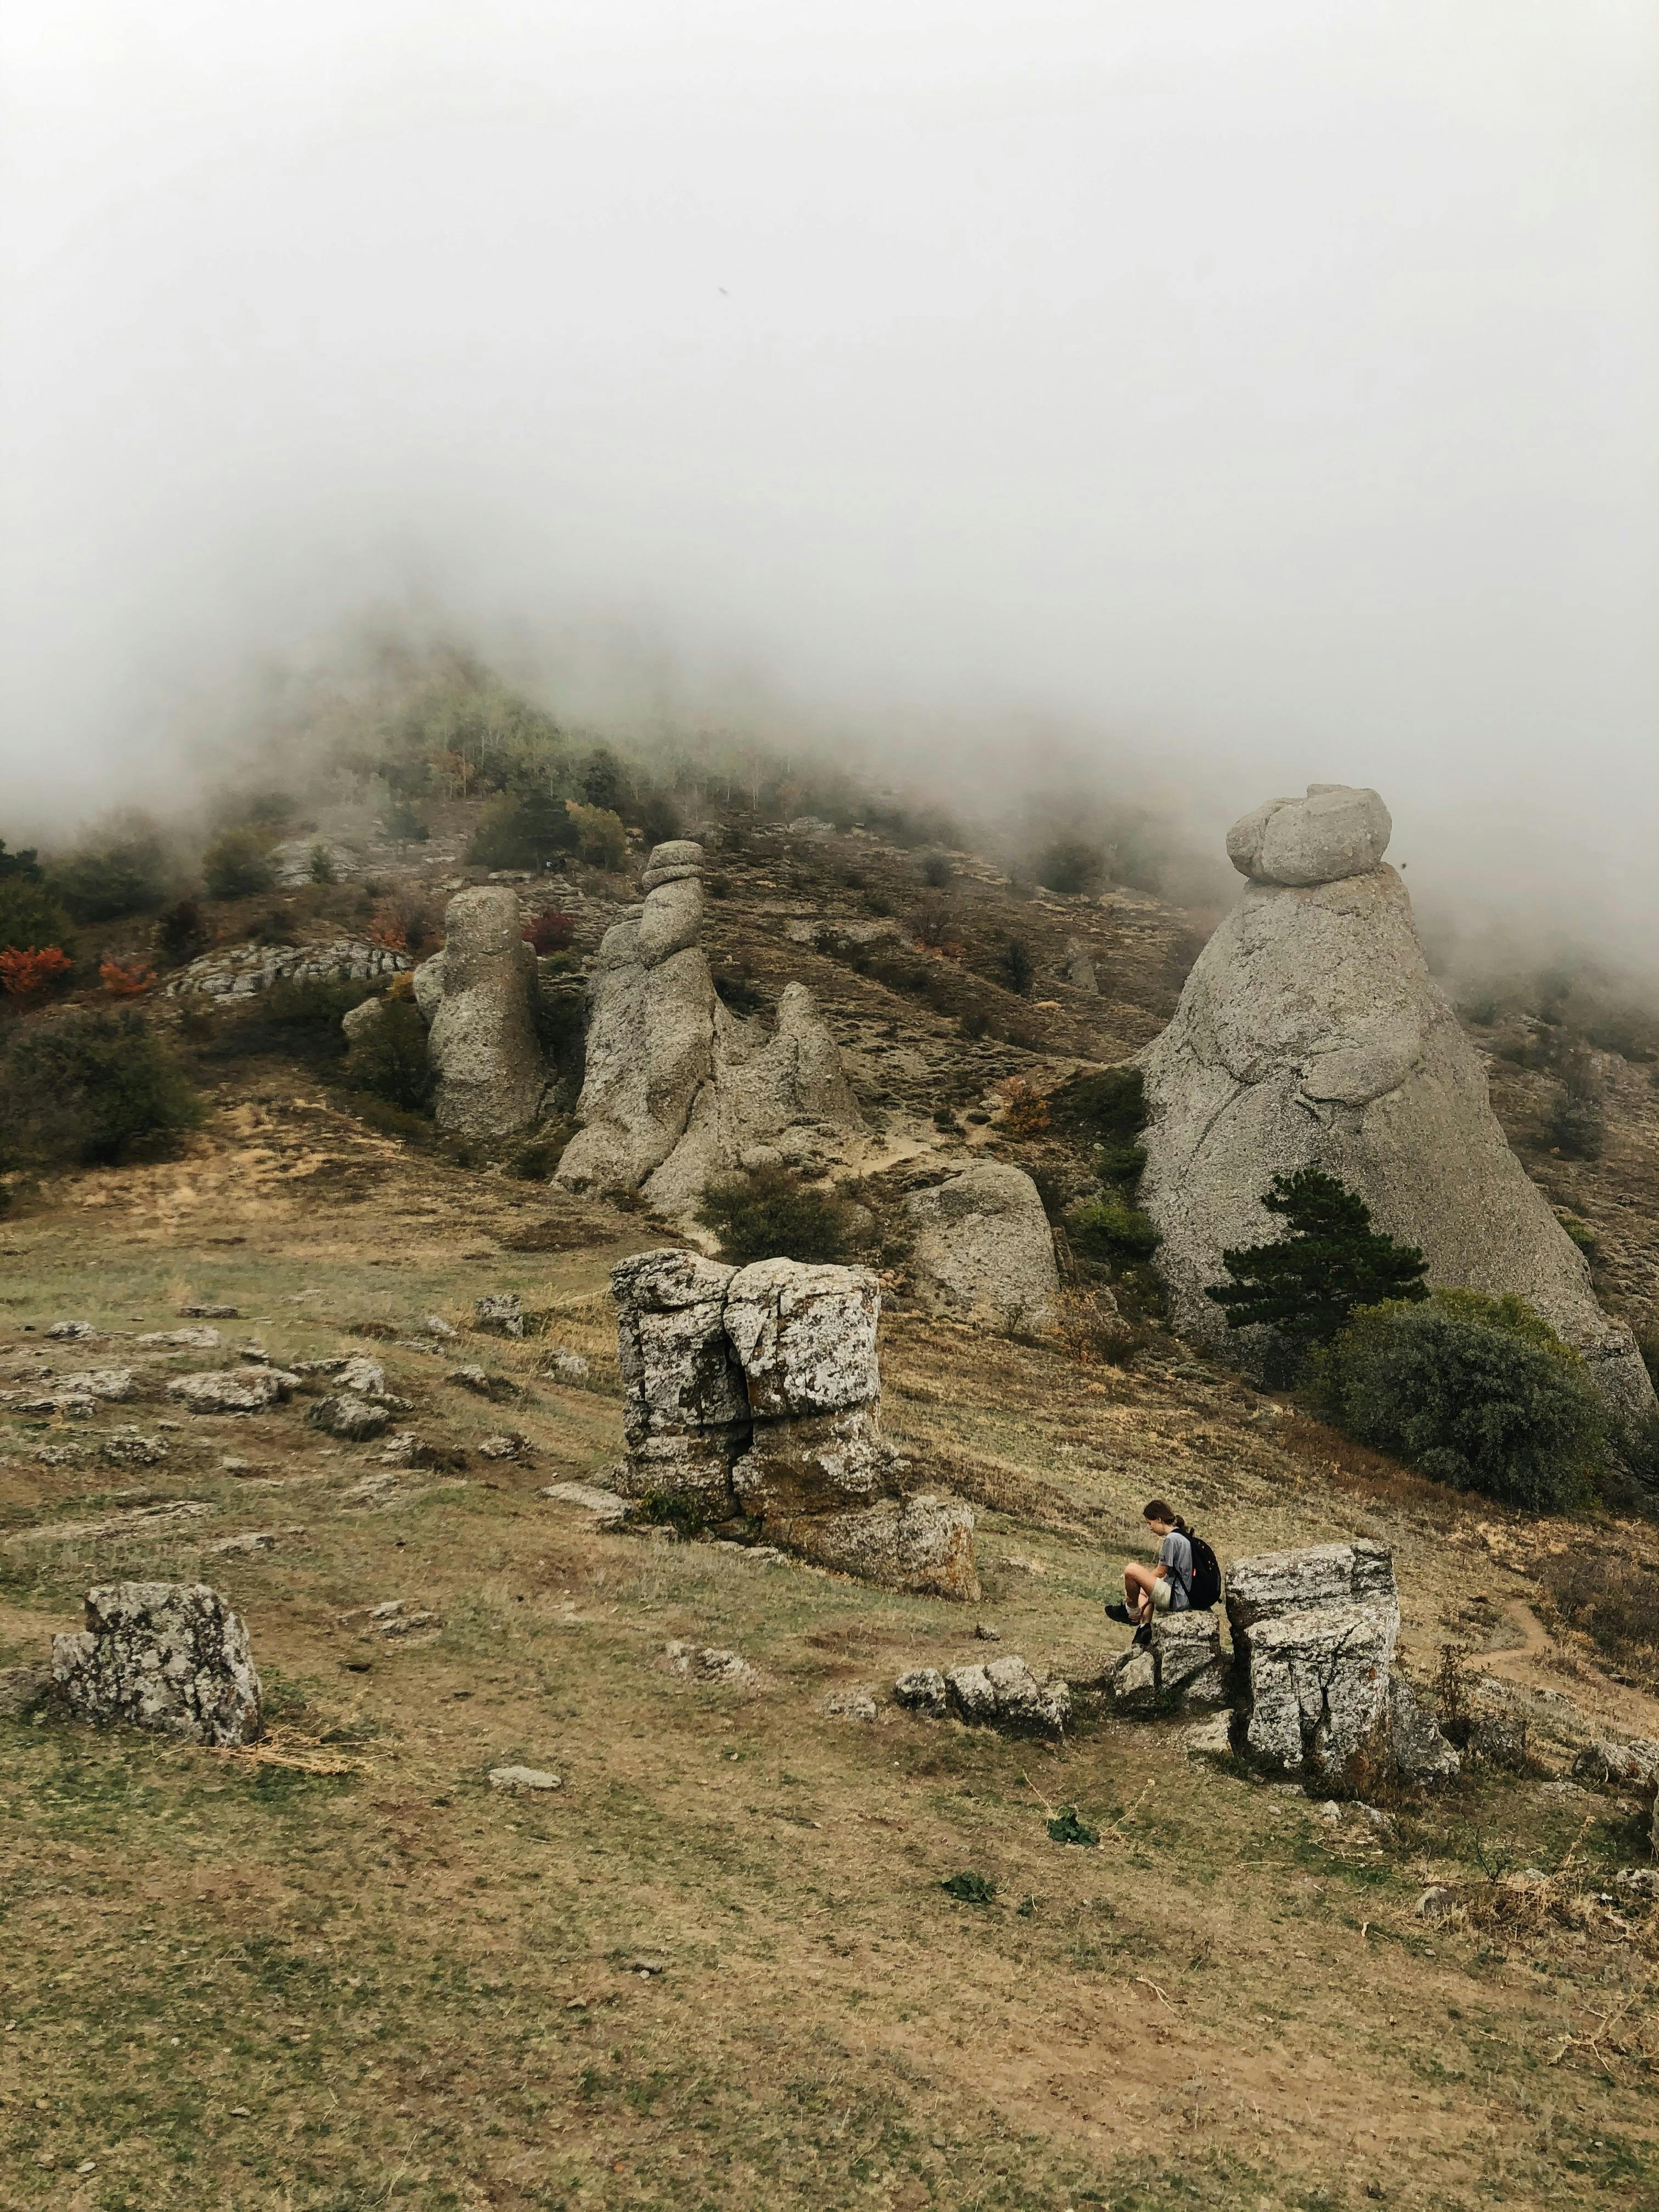 anonymous traveler resting on boulder in rocky mountainous terrain against misty sky